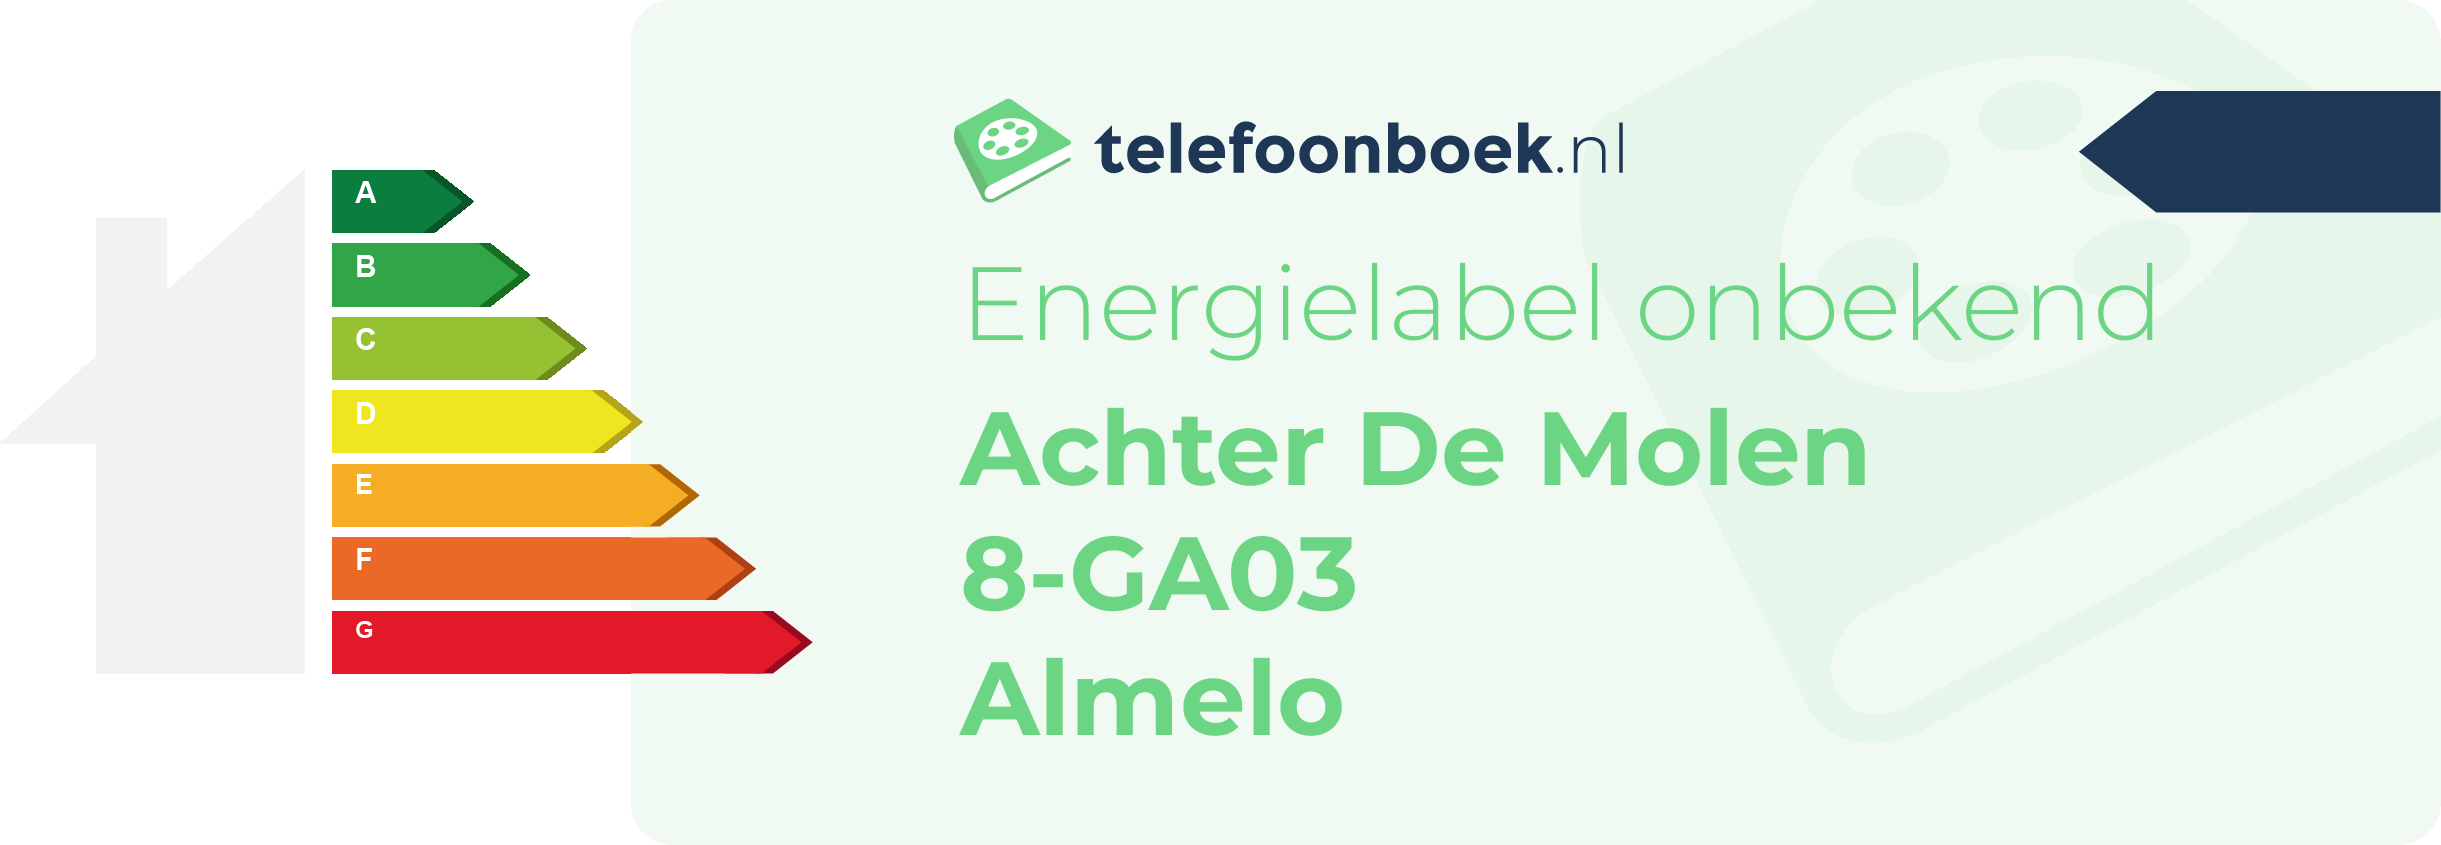 Energielabel Achter De Molen 8-GA03 Almelo